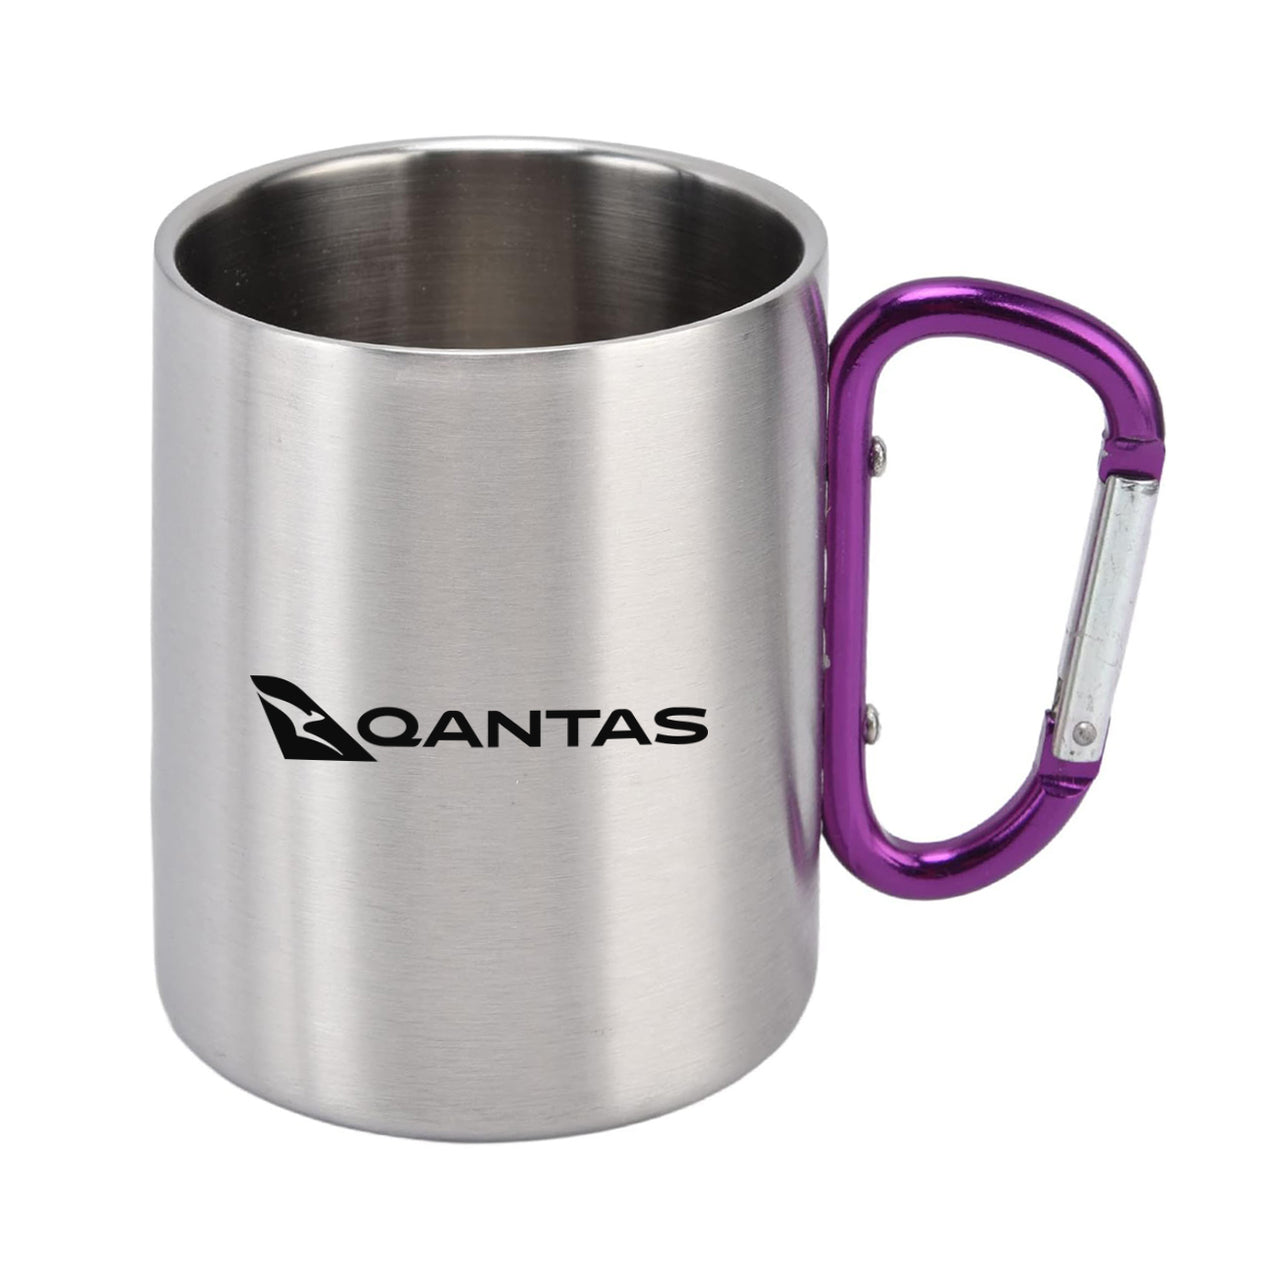 Qantas Airways Airlines Designed Stainless Steel Outdoors Mugs